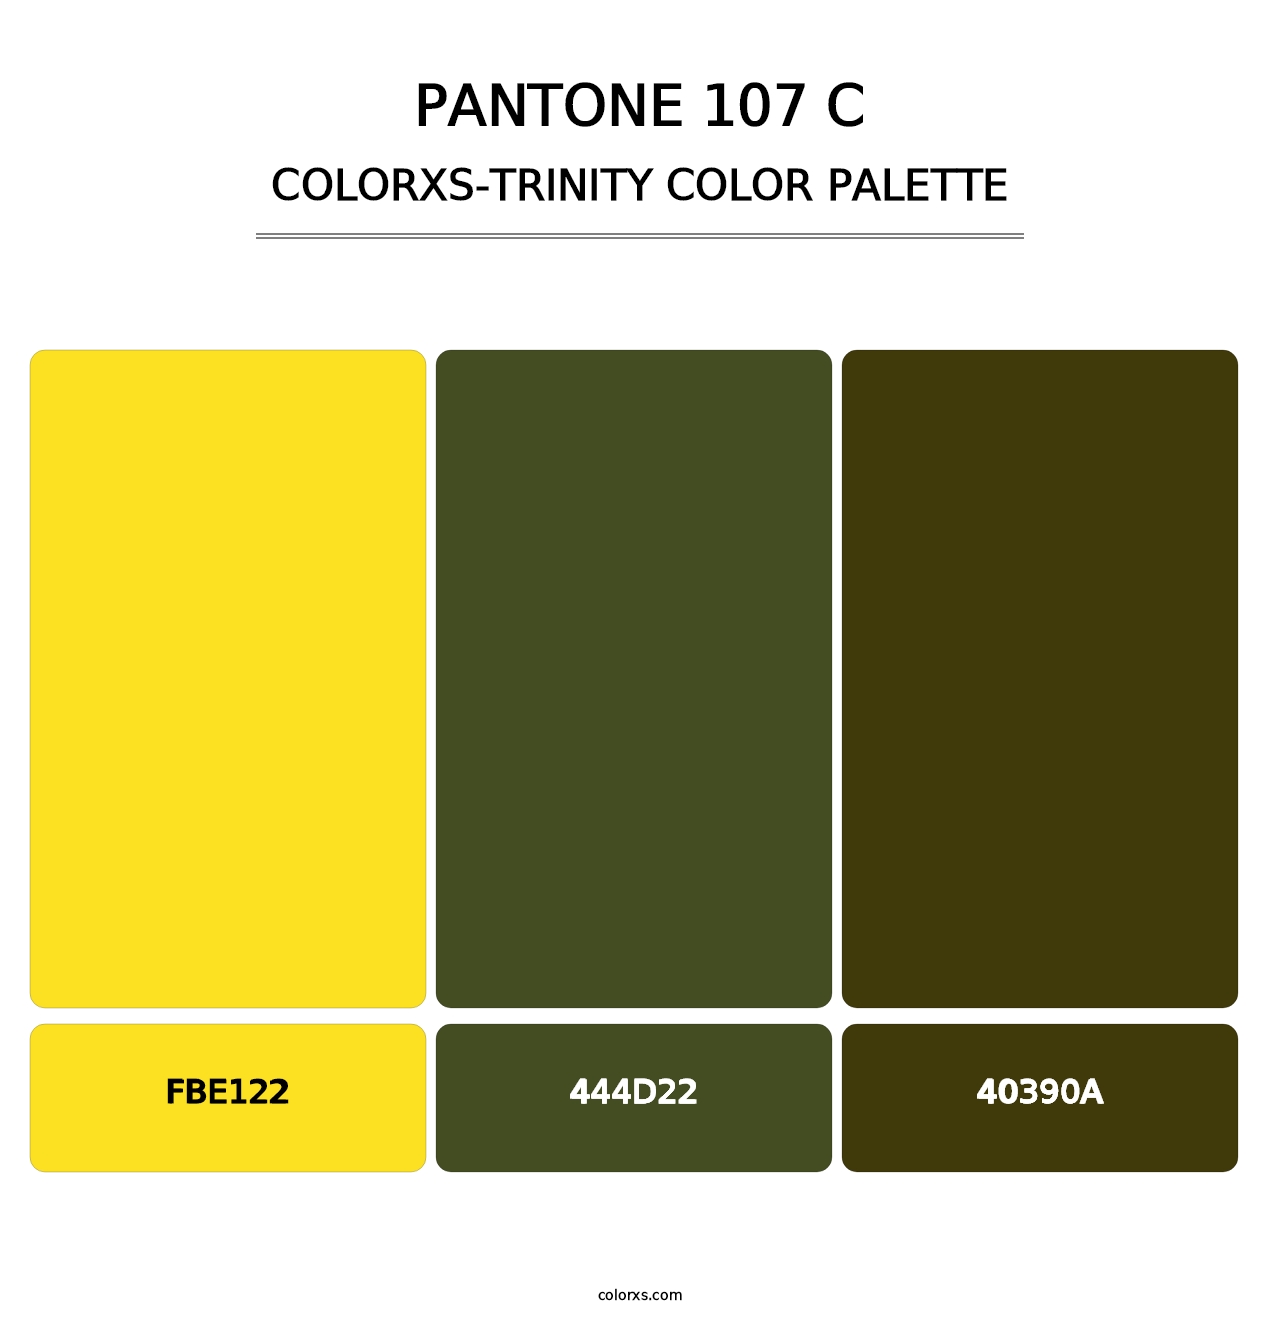 PANTONE 107 C - Colorxs Trinity Palette